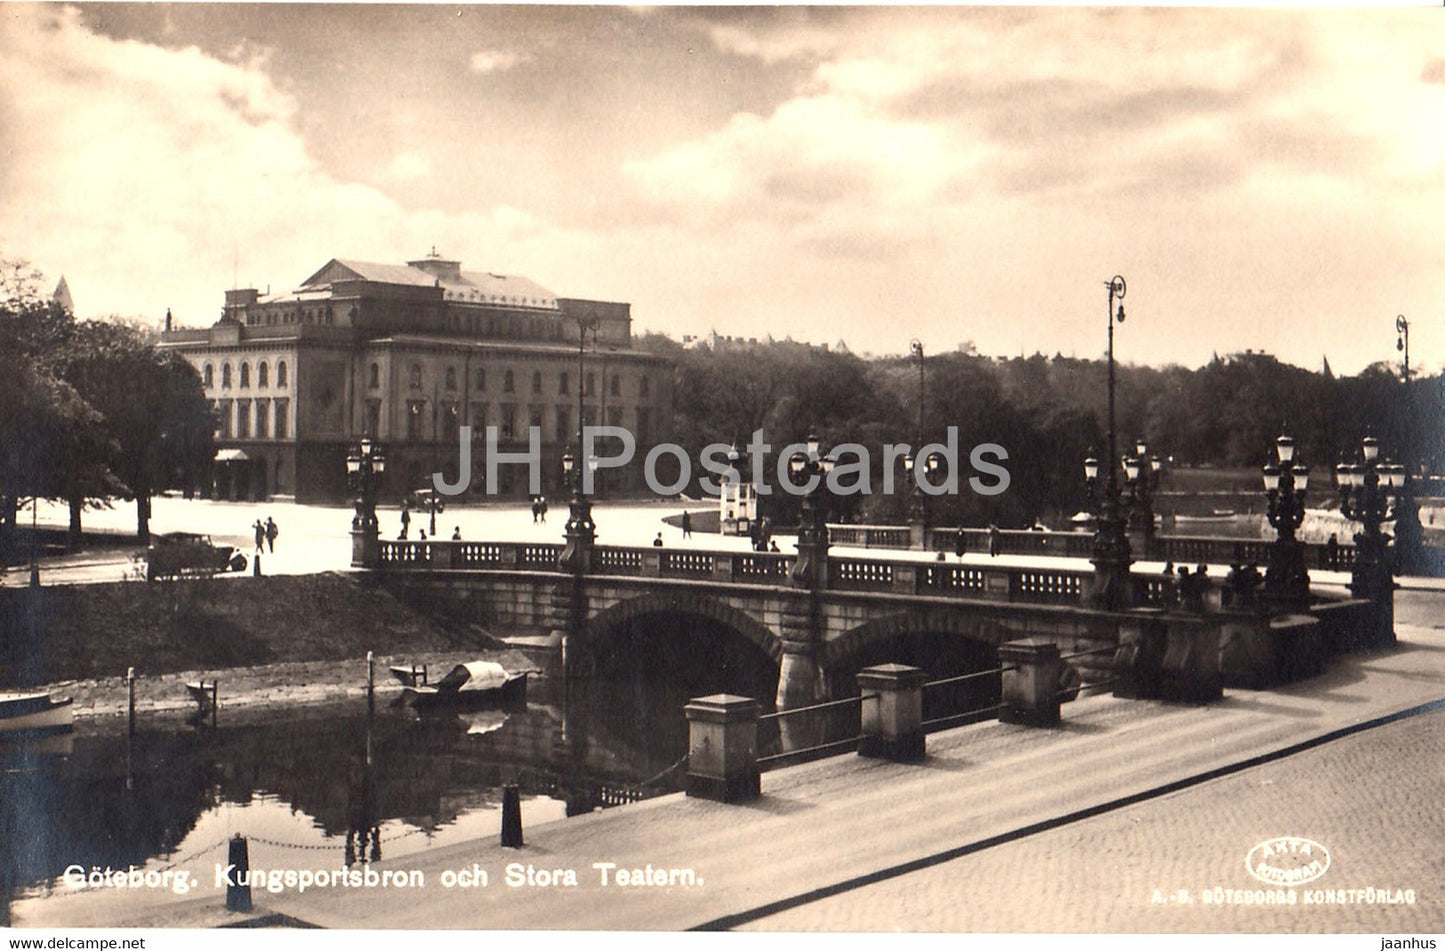 Goteborg - Kungsportsbron och Stora Teatern - theatre - 158 - old postcard - Sweden - unused - JH Postcards